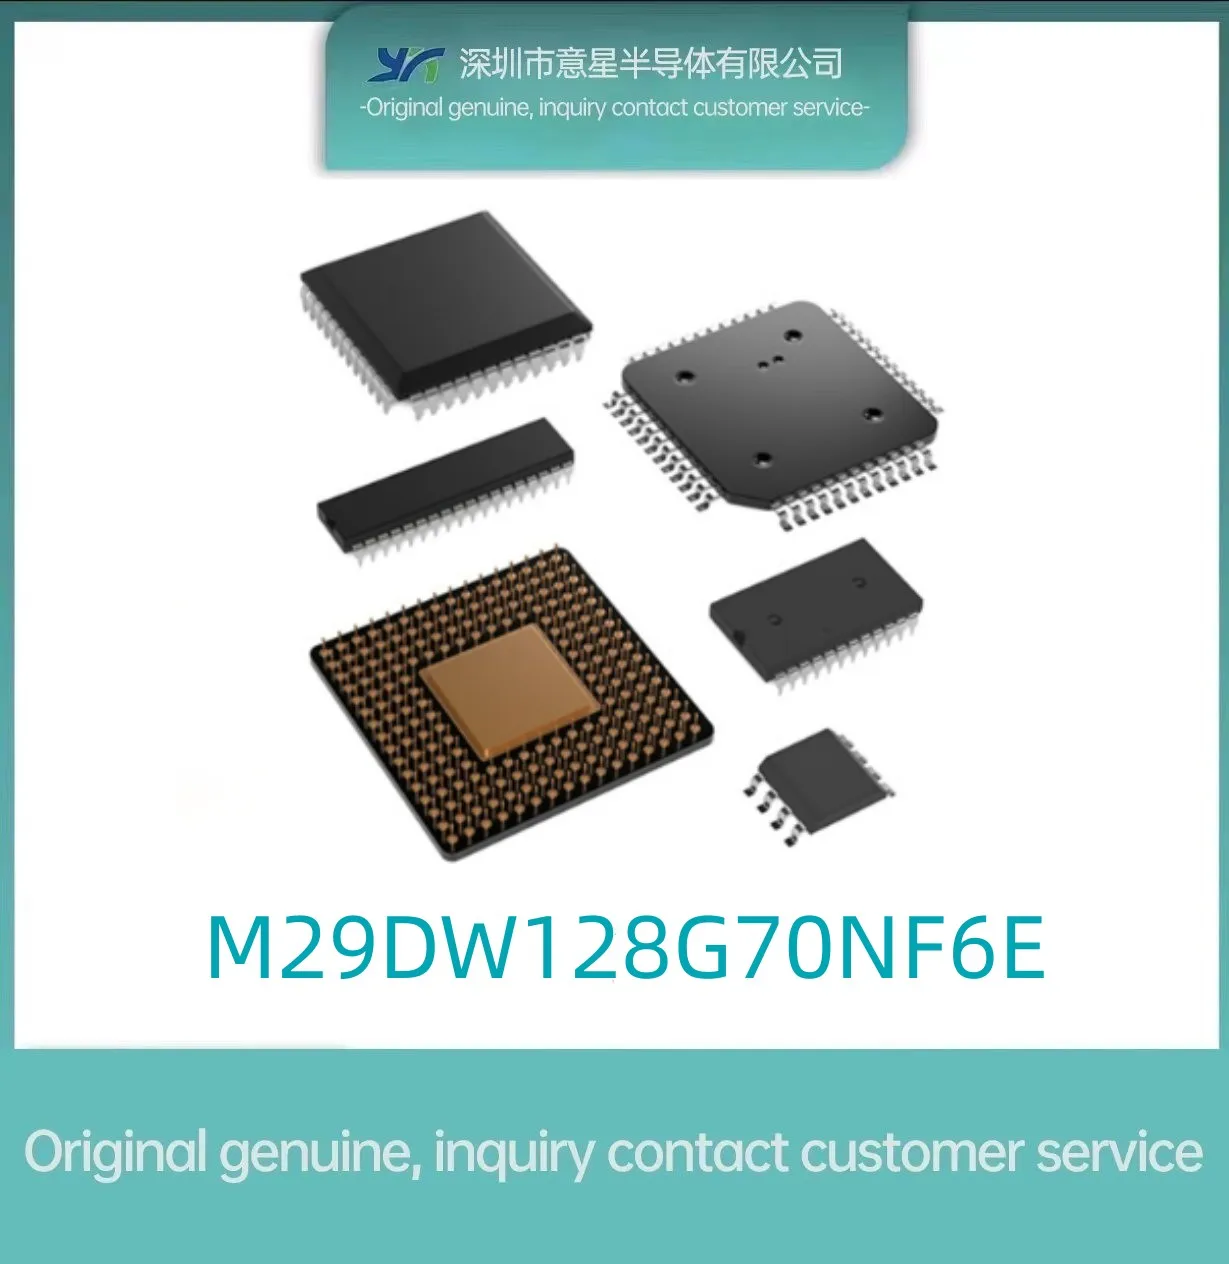 

M29DW128G70NF6E package TSOP56 memory original authentic chip